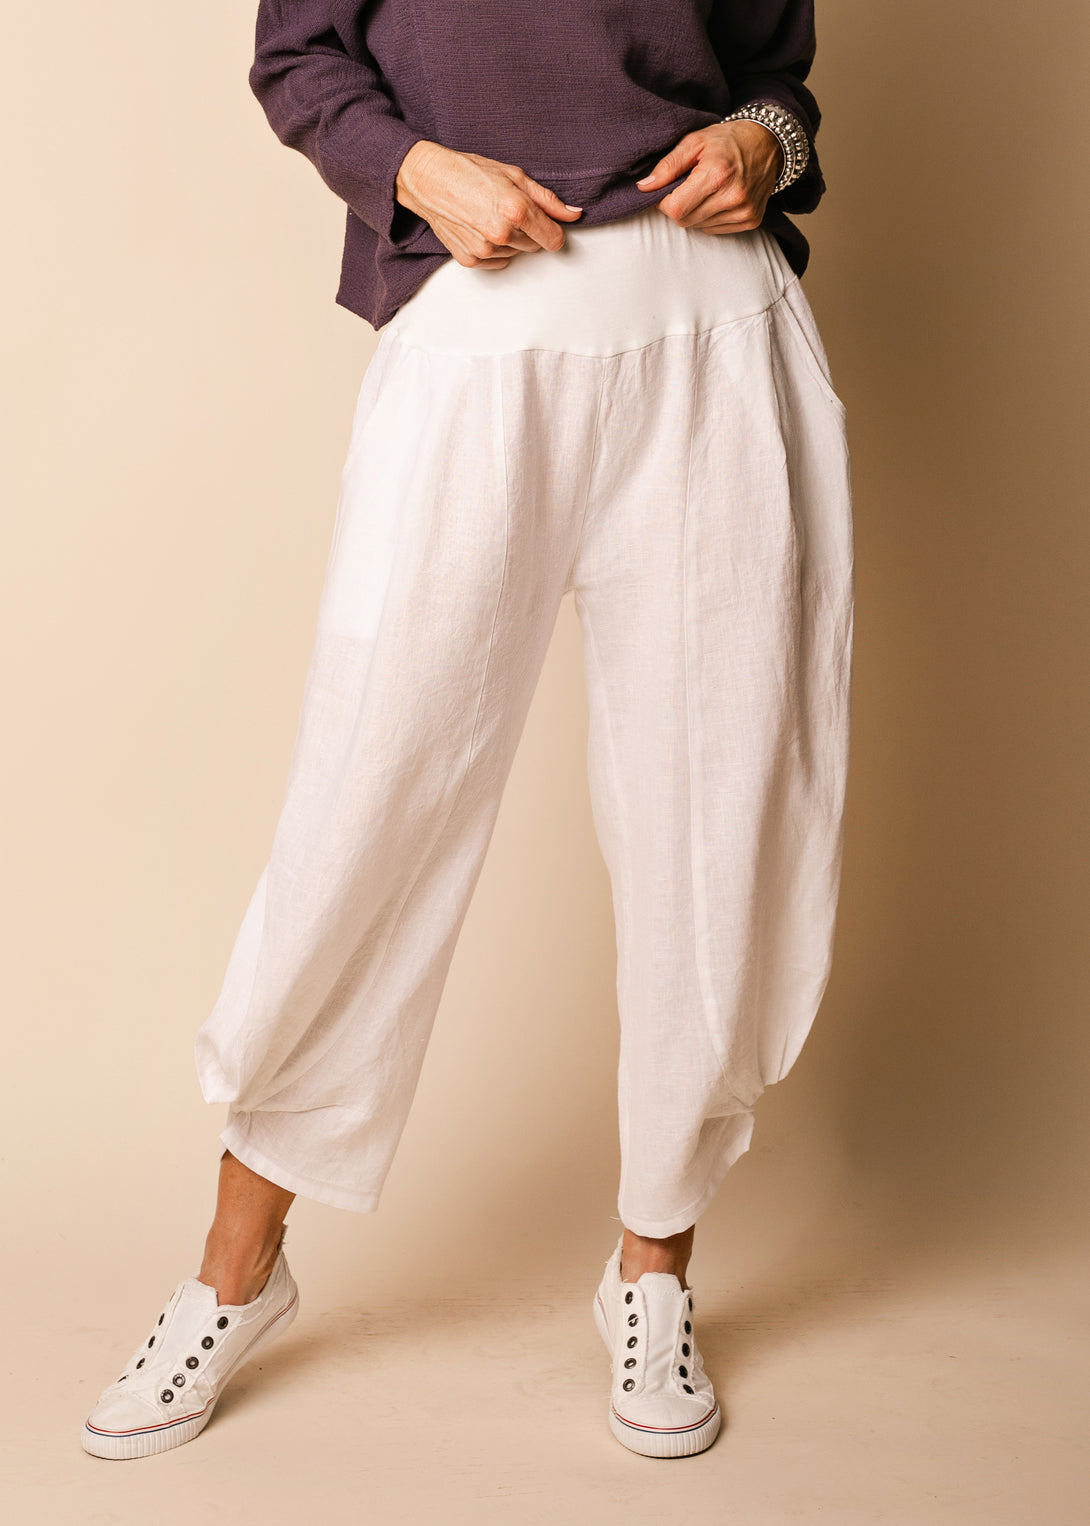 Amaka Linen  Pants Full Length in White - Imagine Fashion